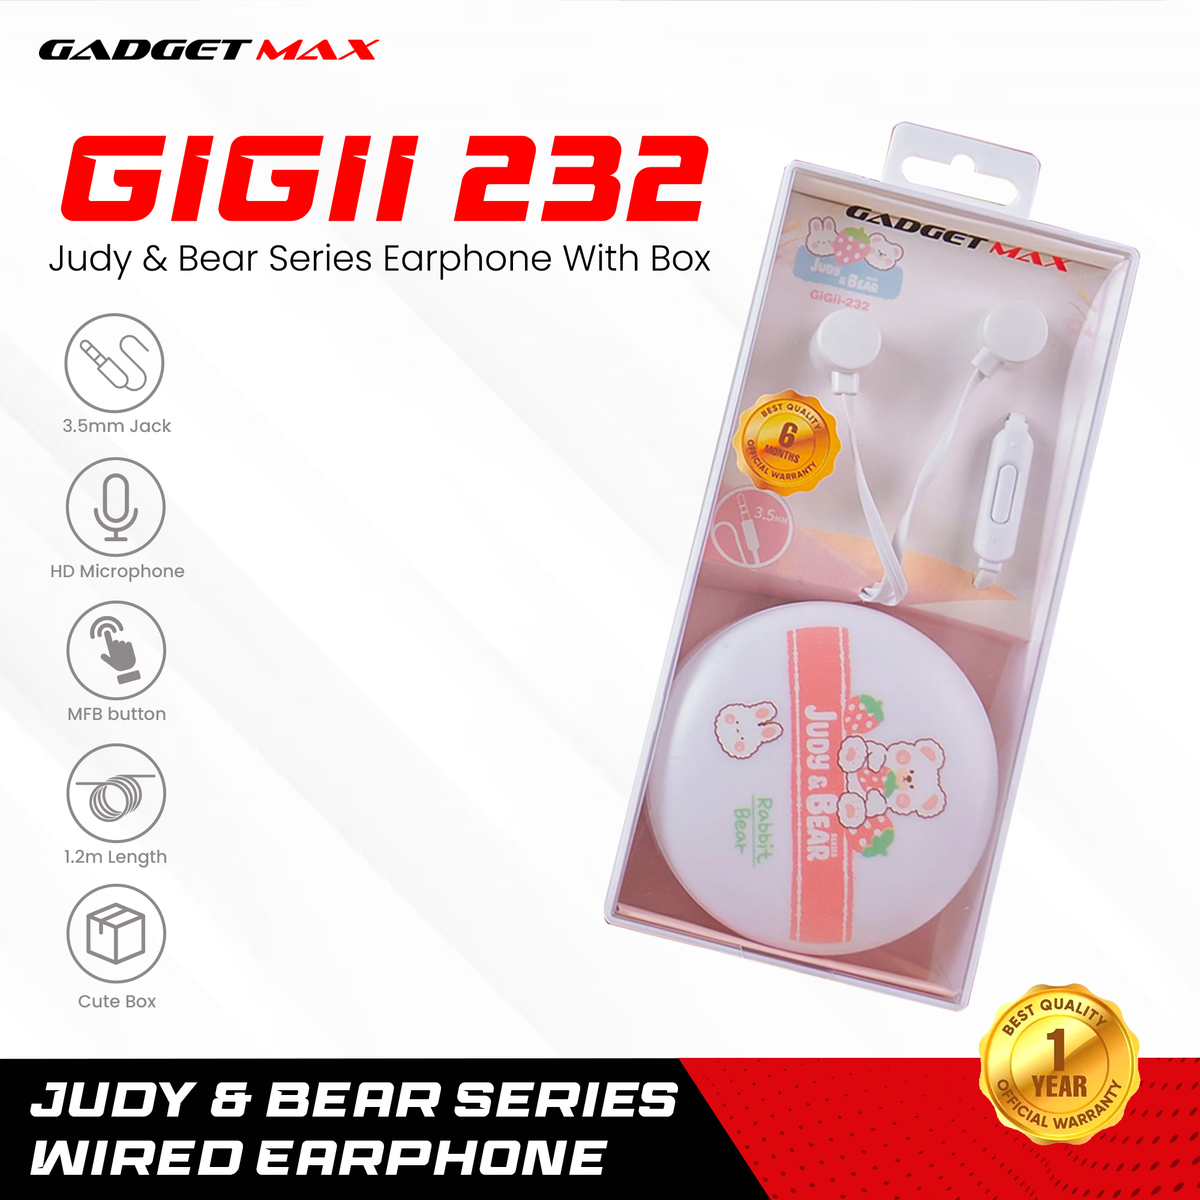 GADGET MAX GIGI-232 JUDY&BEAR SERIES 3.5 MM WIRED EARPHONE - WHITE